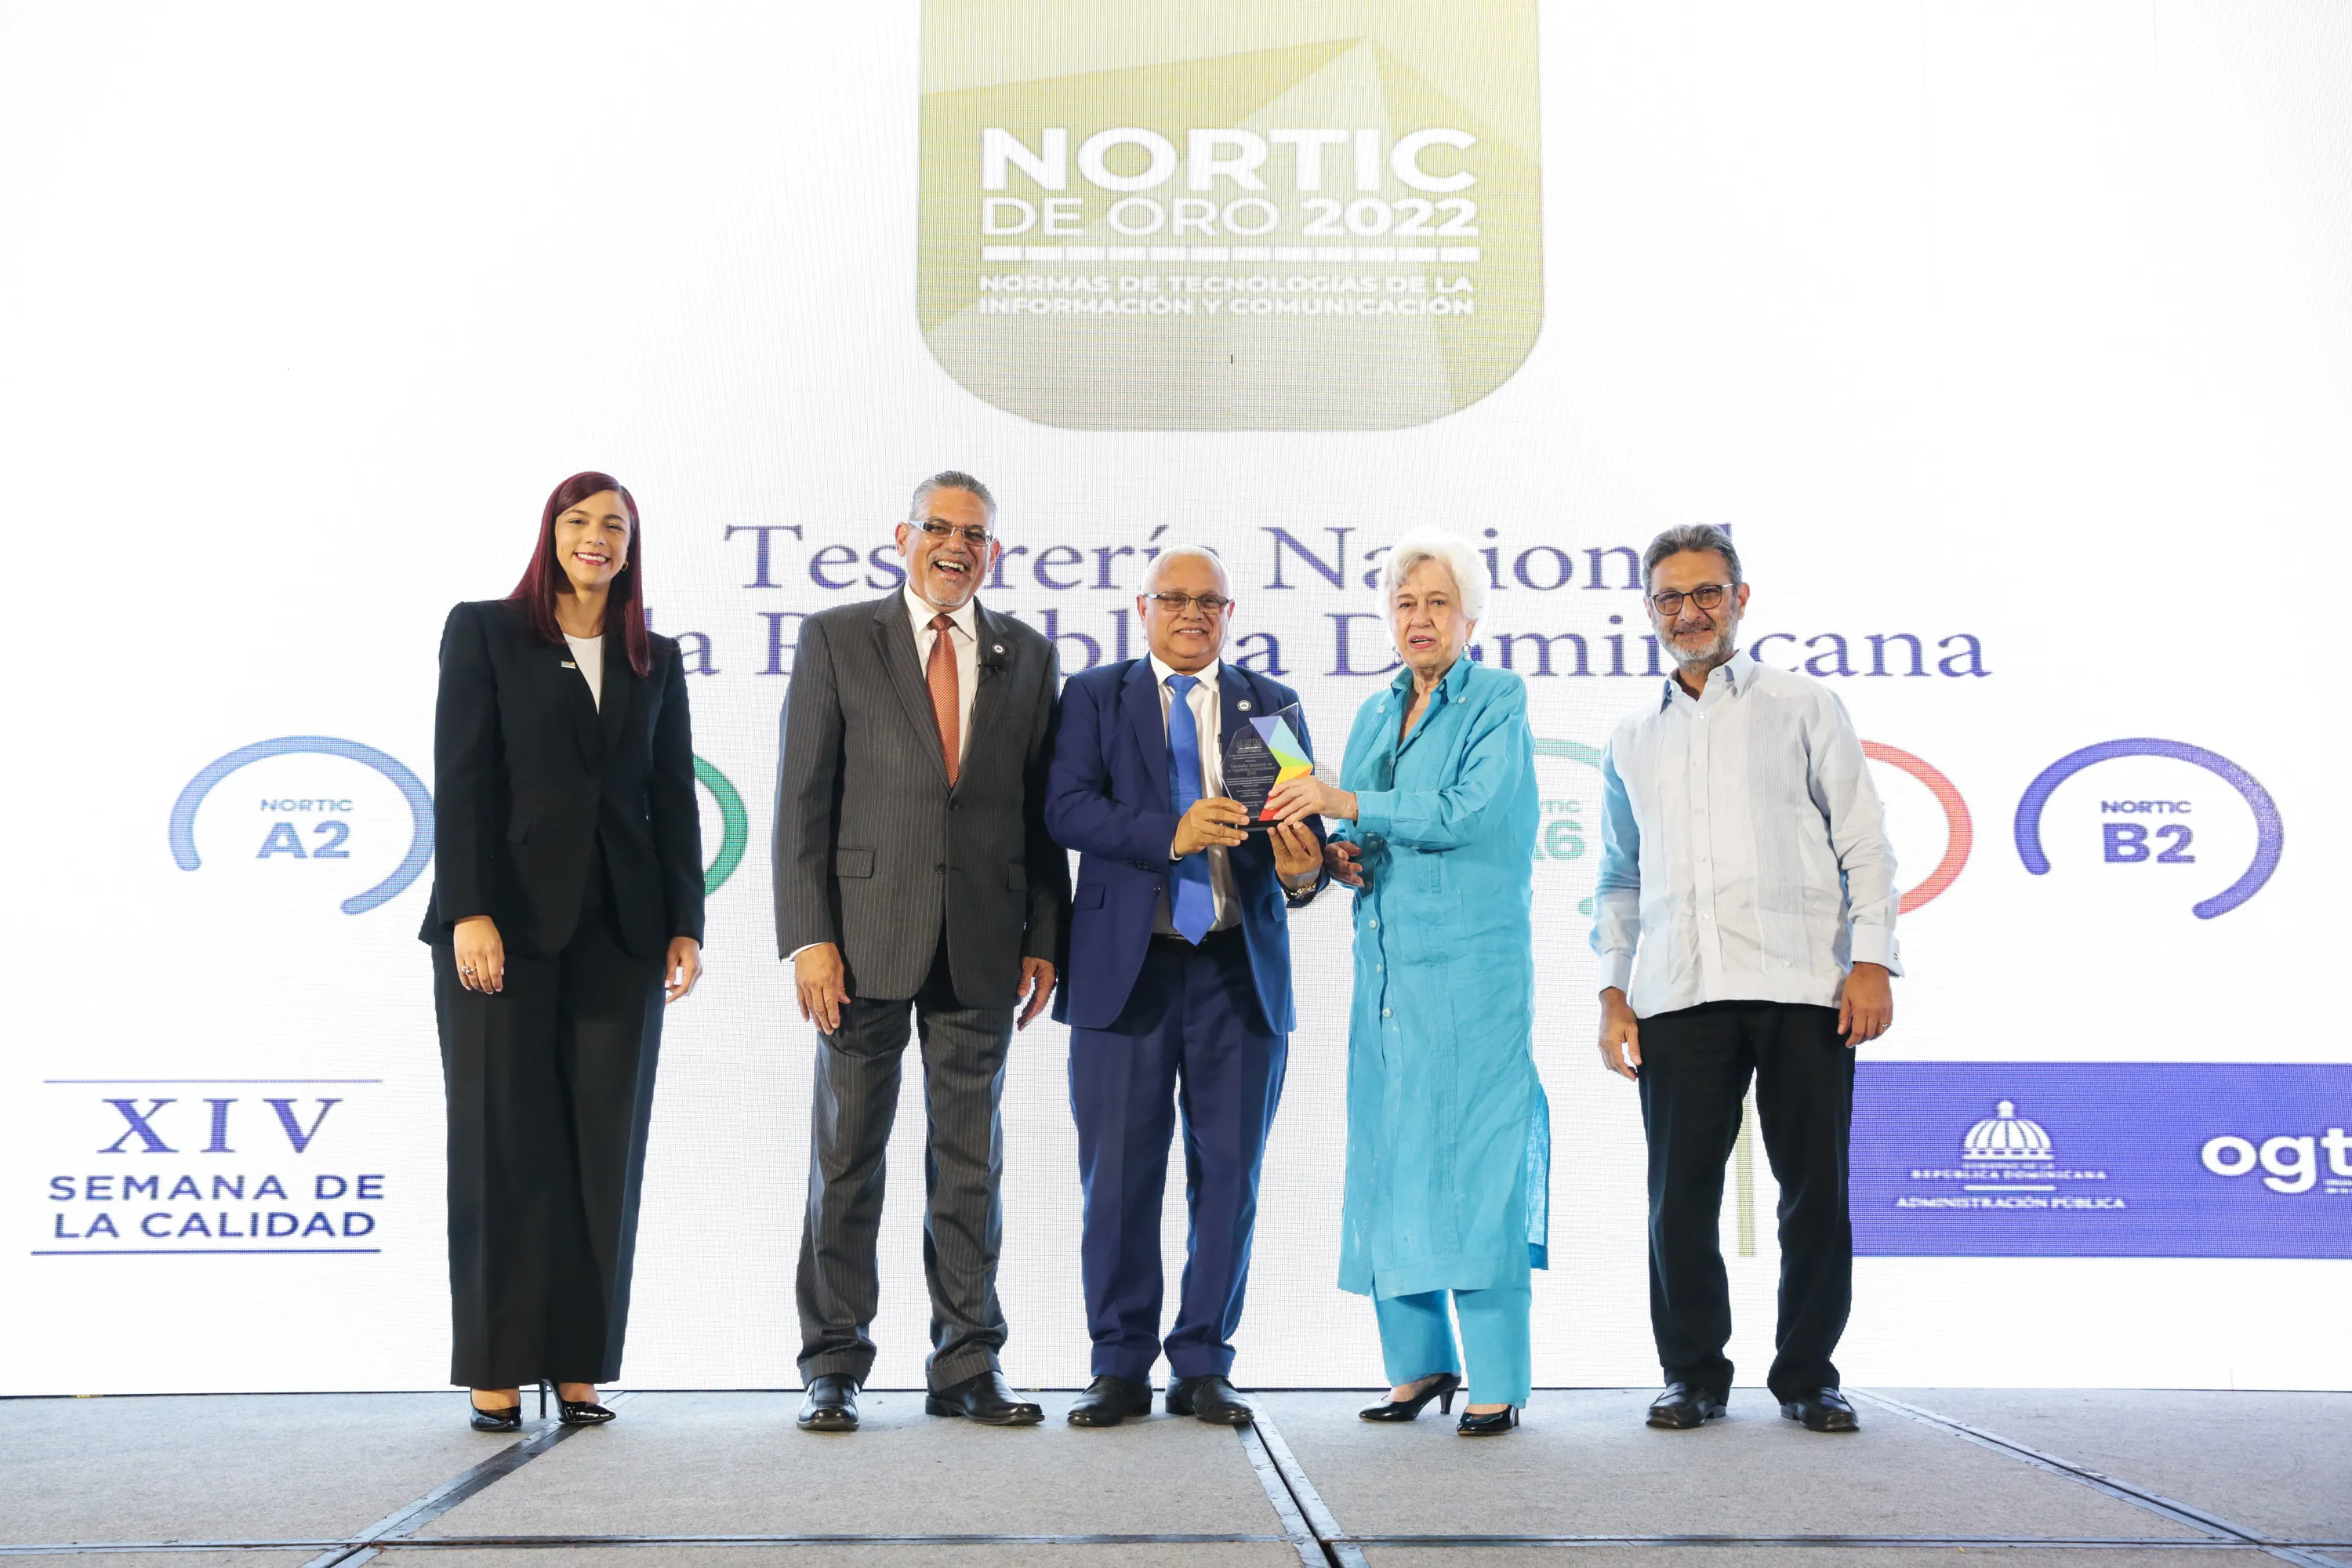 Tesorería Nacional logra premio Nortic de Oro 2022